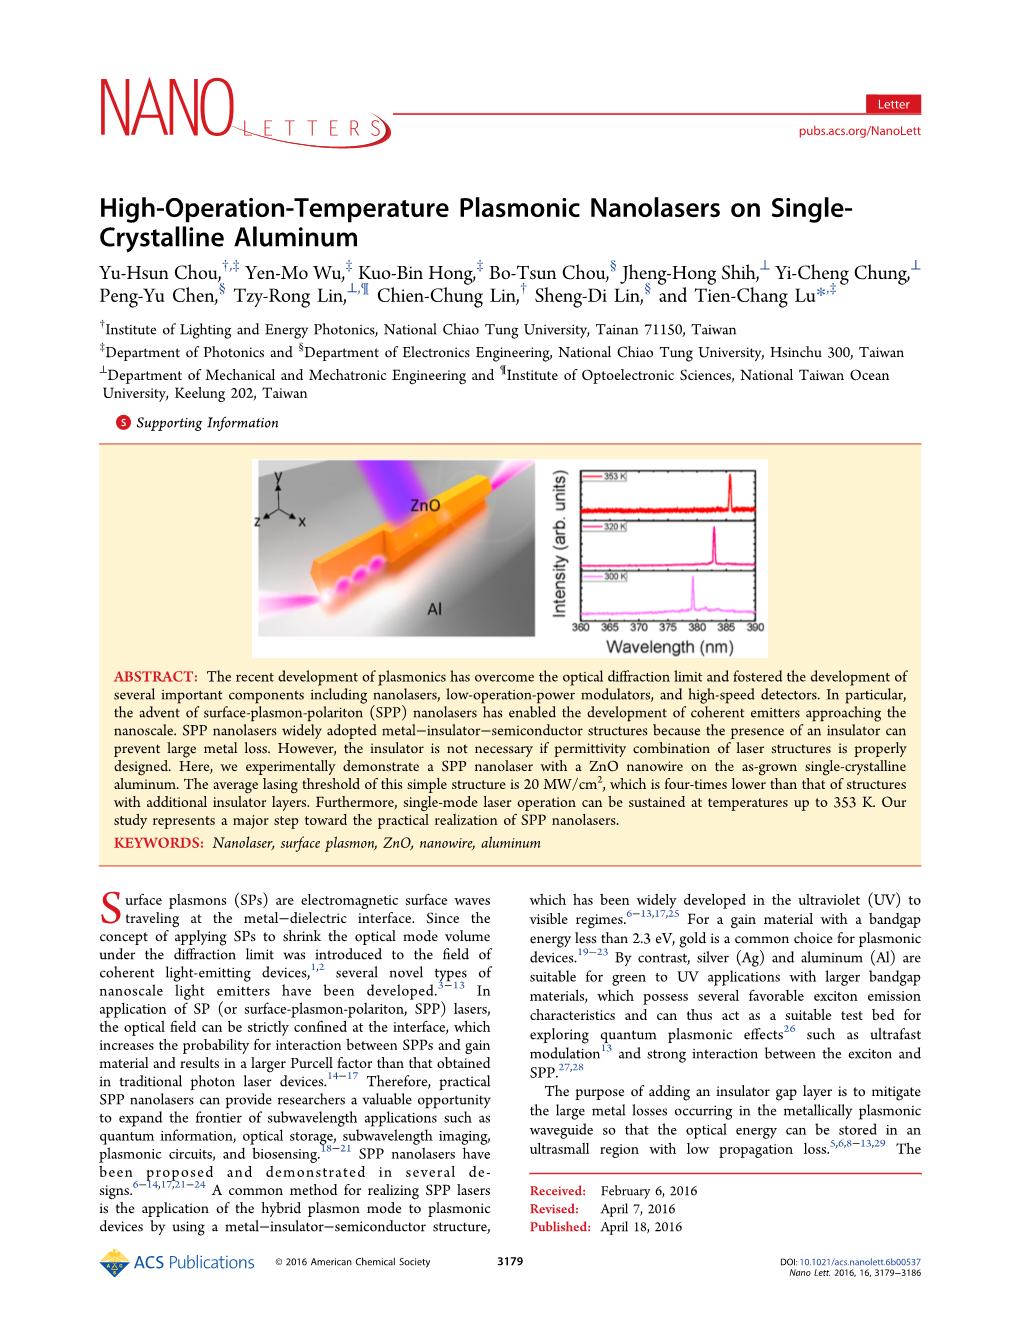 High-Operation-Temperature Plasmonic Nanolasers on Single